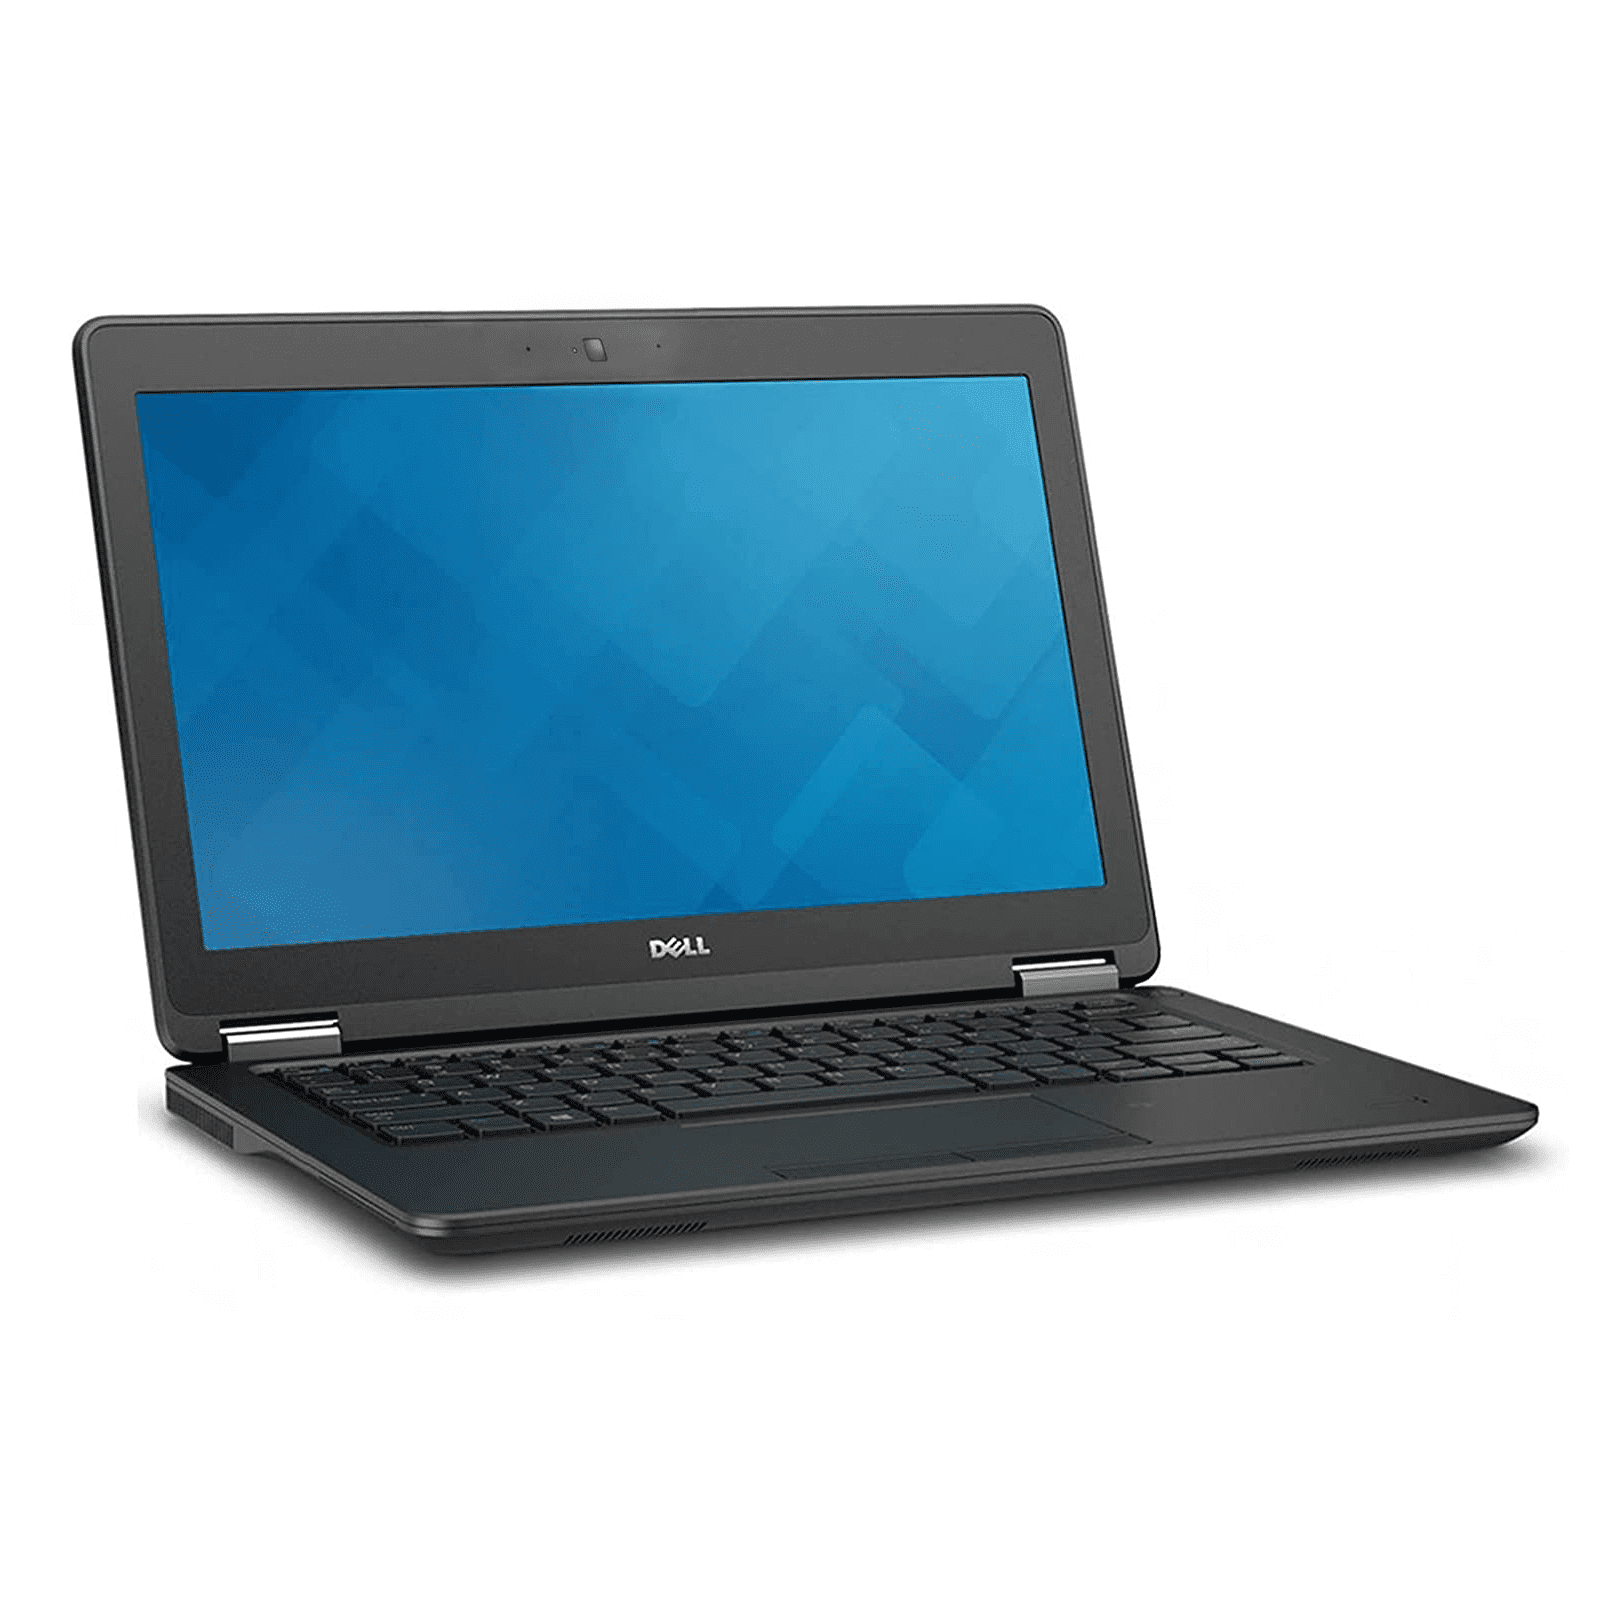 Dell Latitude E Laptop Bundle, 2.6 GHz Intel Core i7 5th Gen